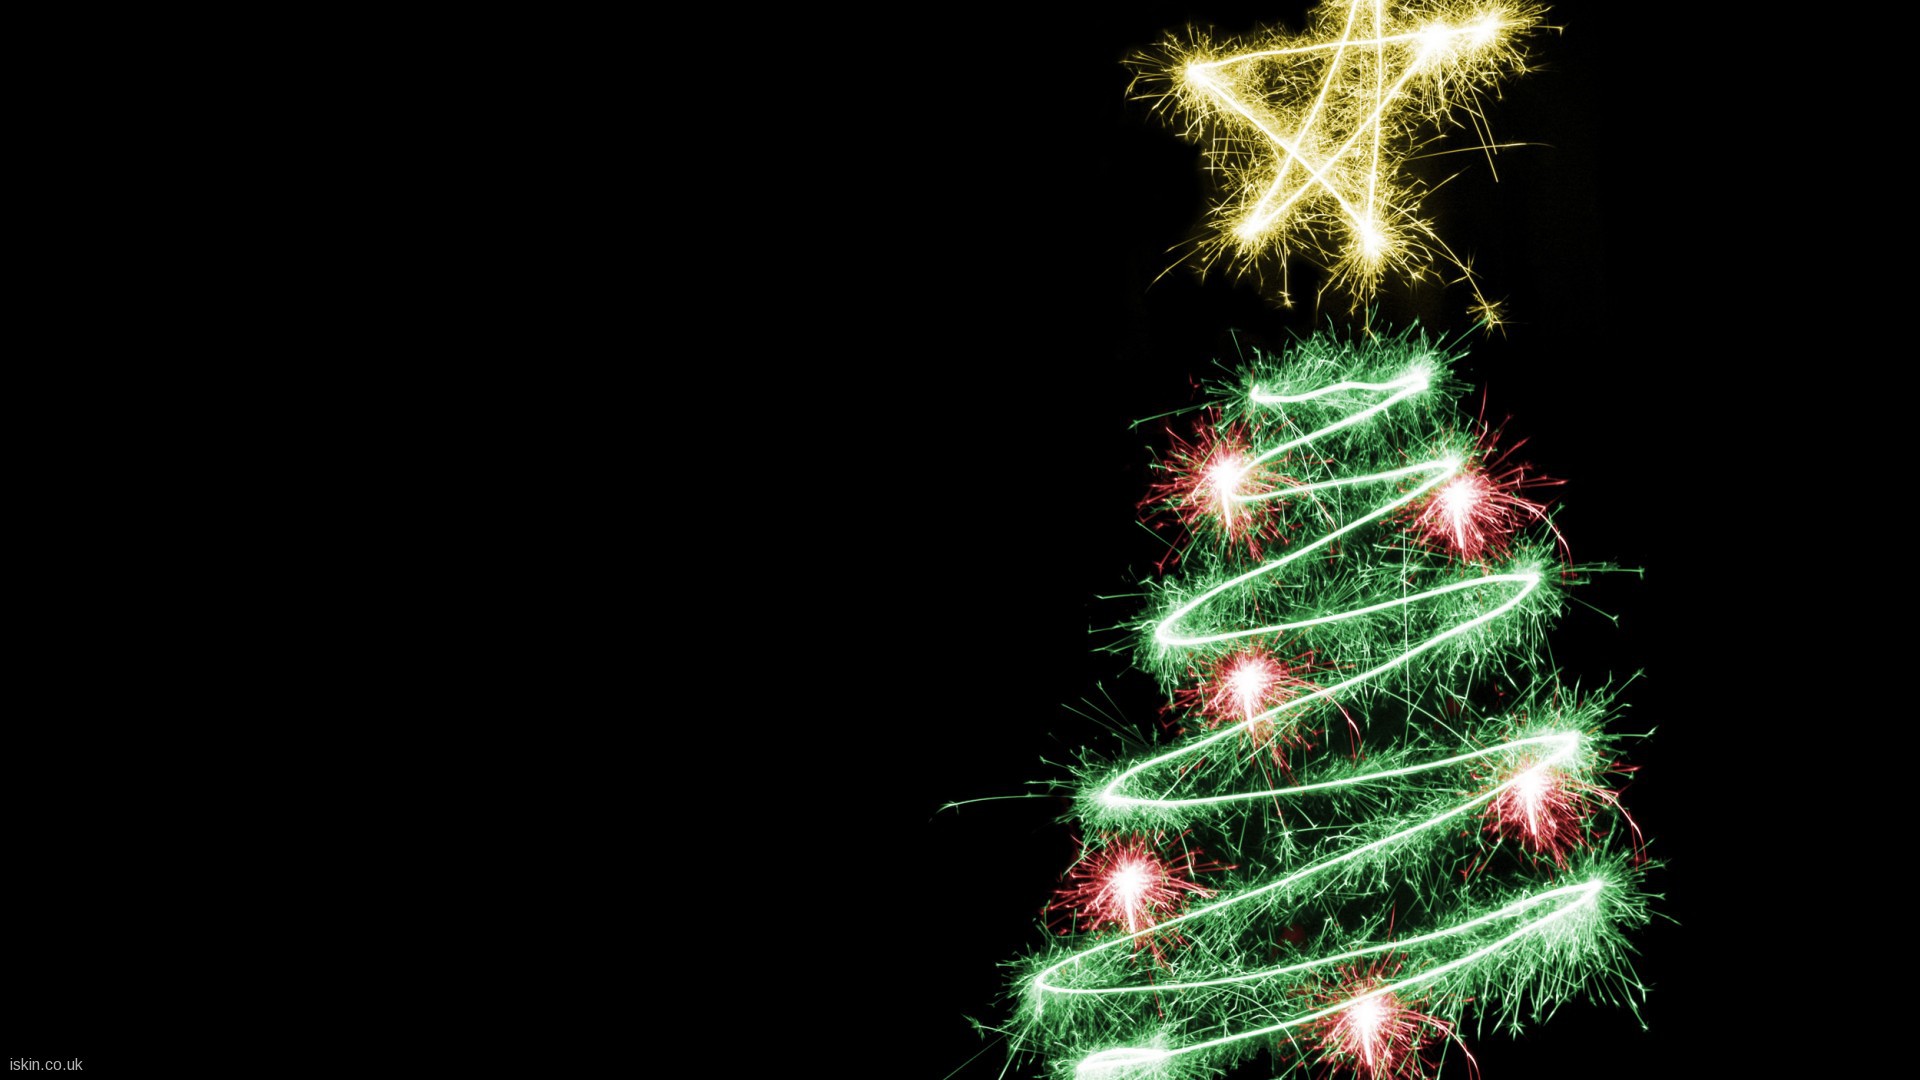 Shimmering Christmas Tree On Black Background